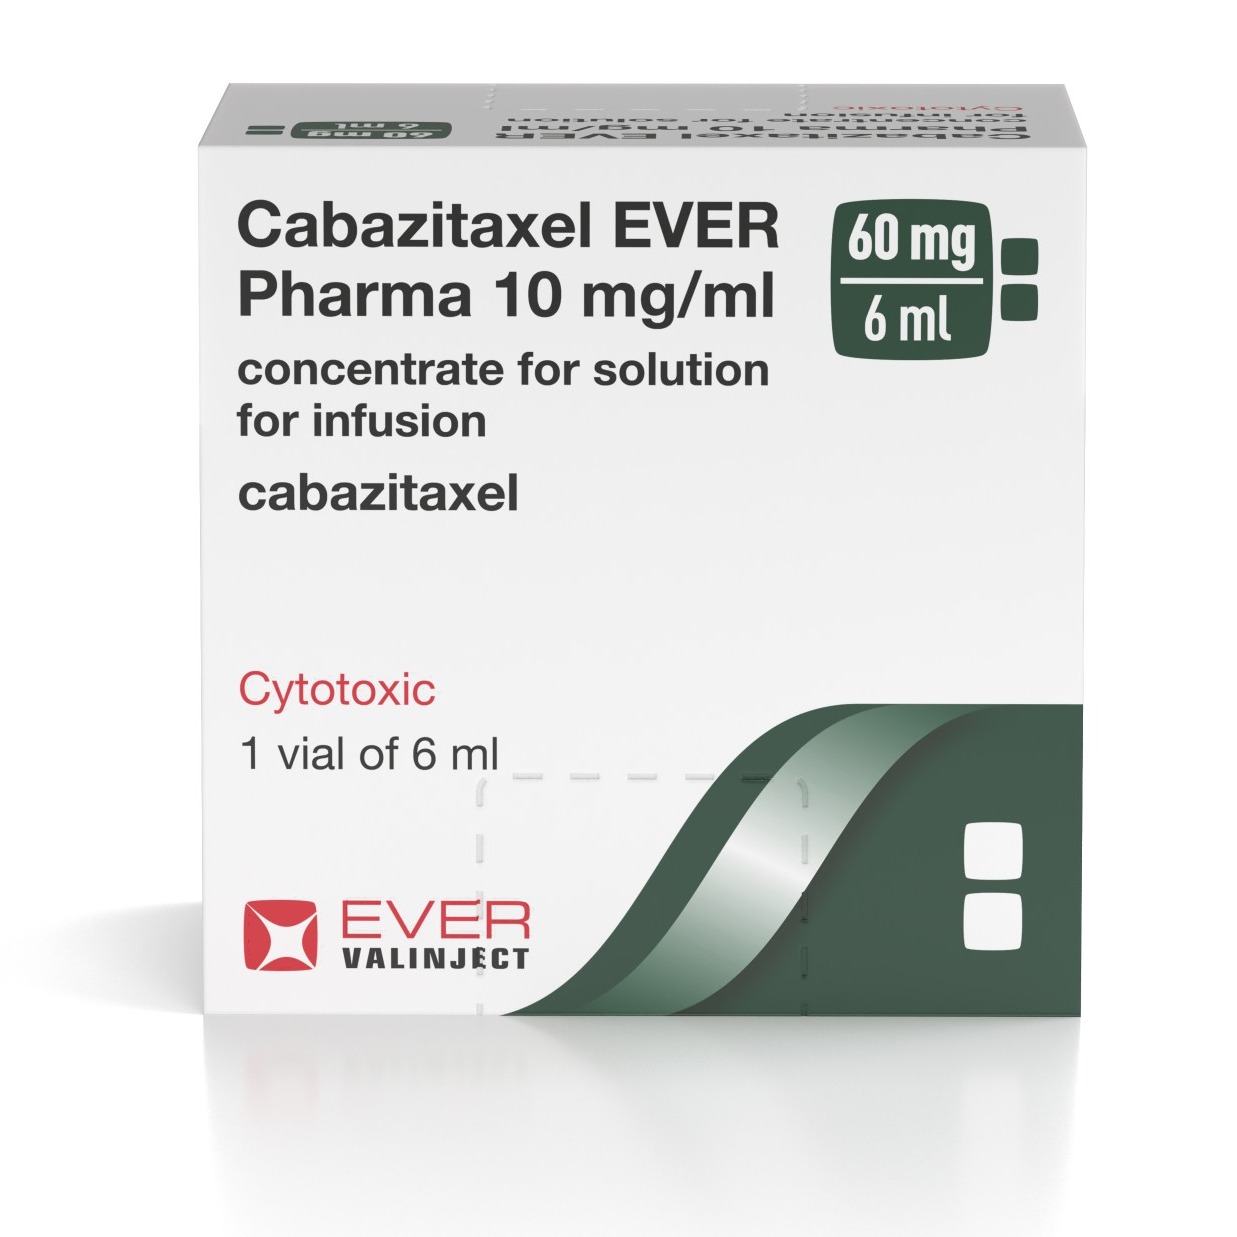 Cabazitaxel EVER Pharma: 45mg/4.5ml + 50mg/5ml + 60mg/60ml - Single liquid vial